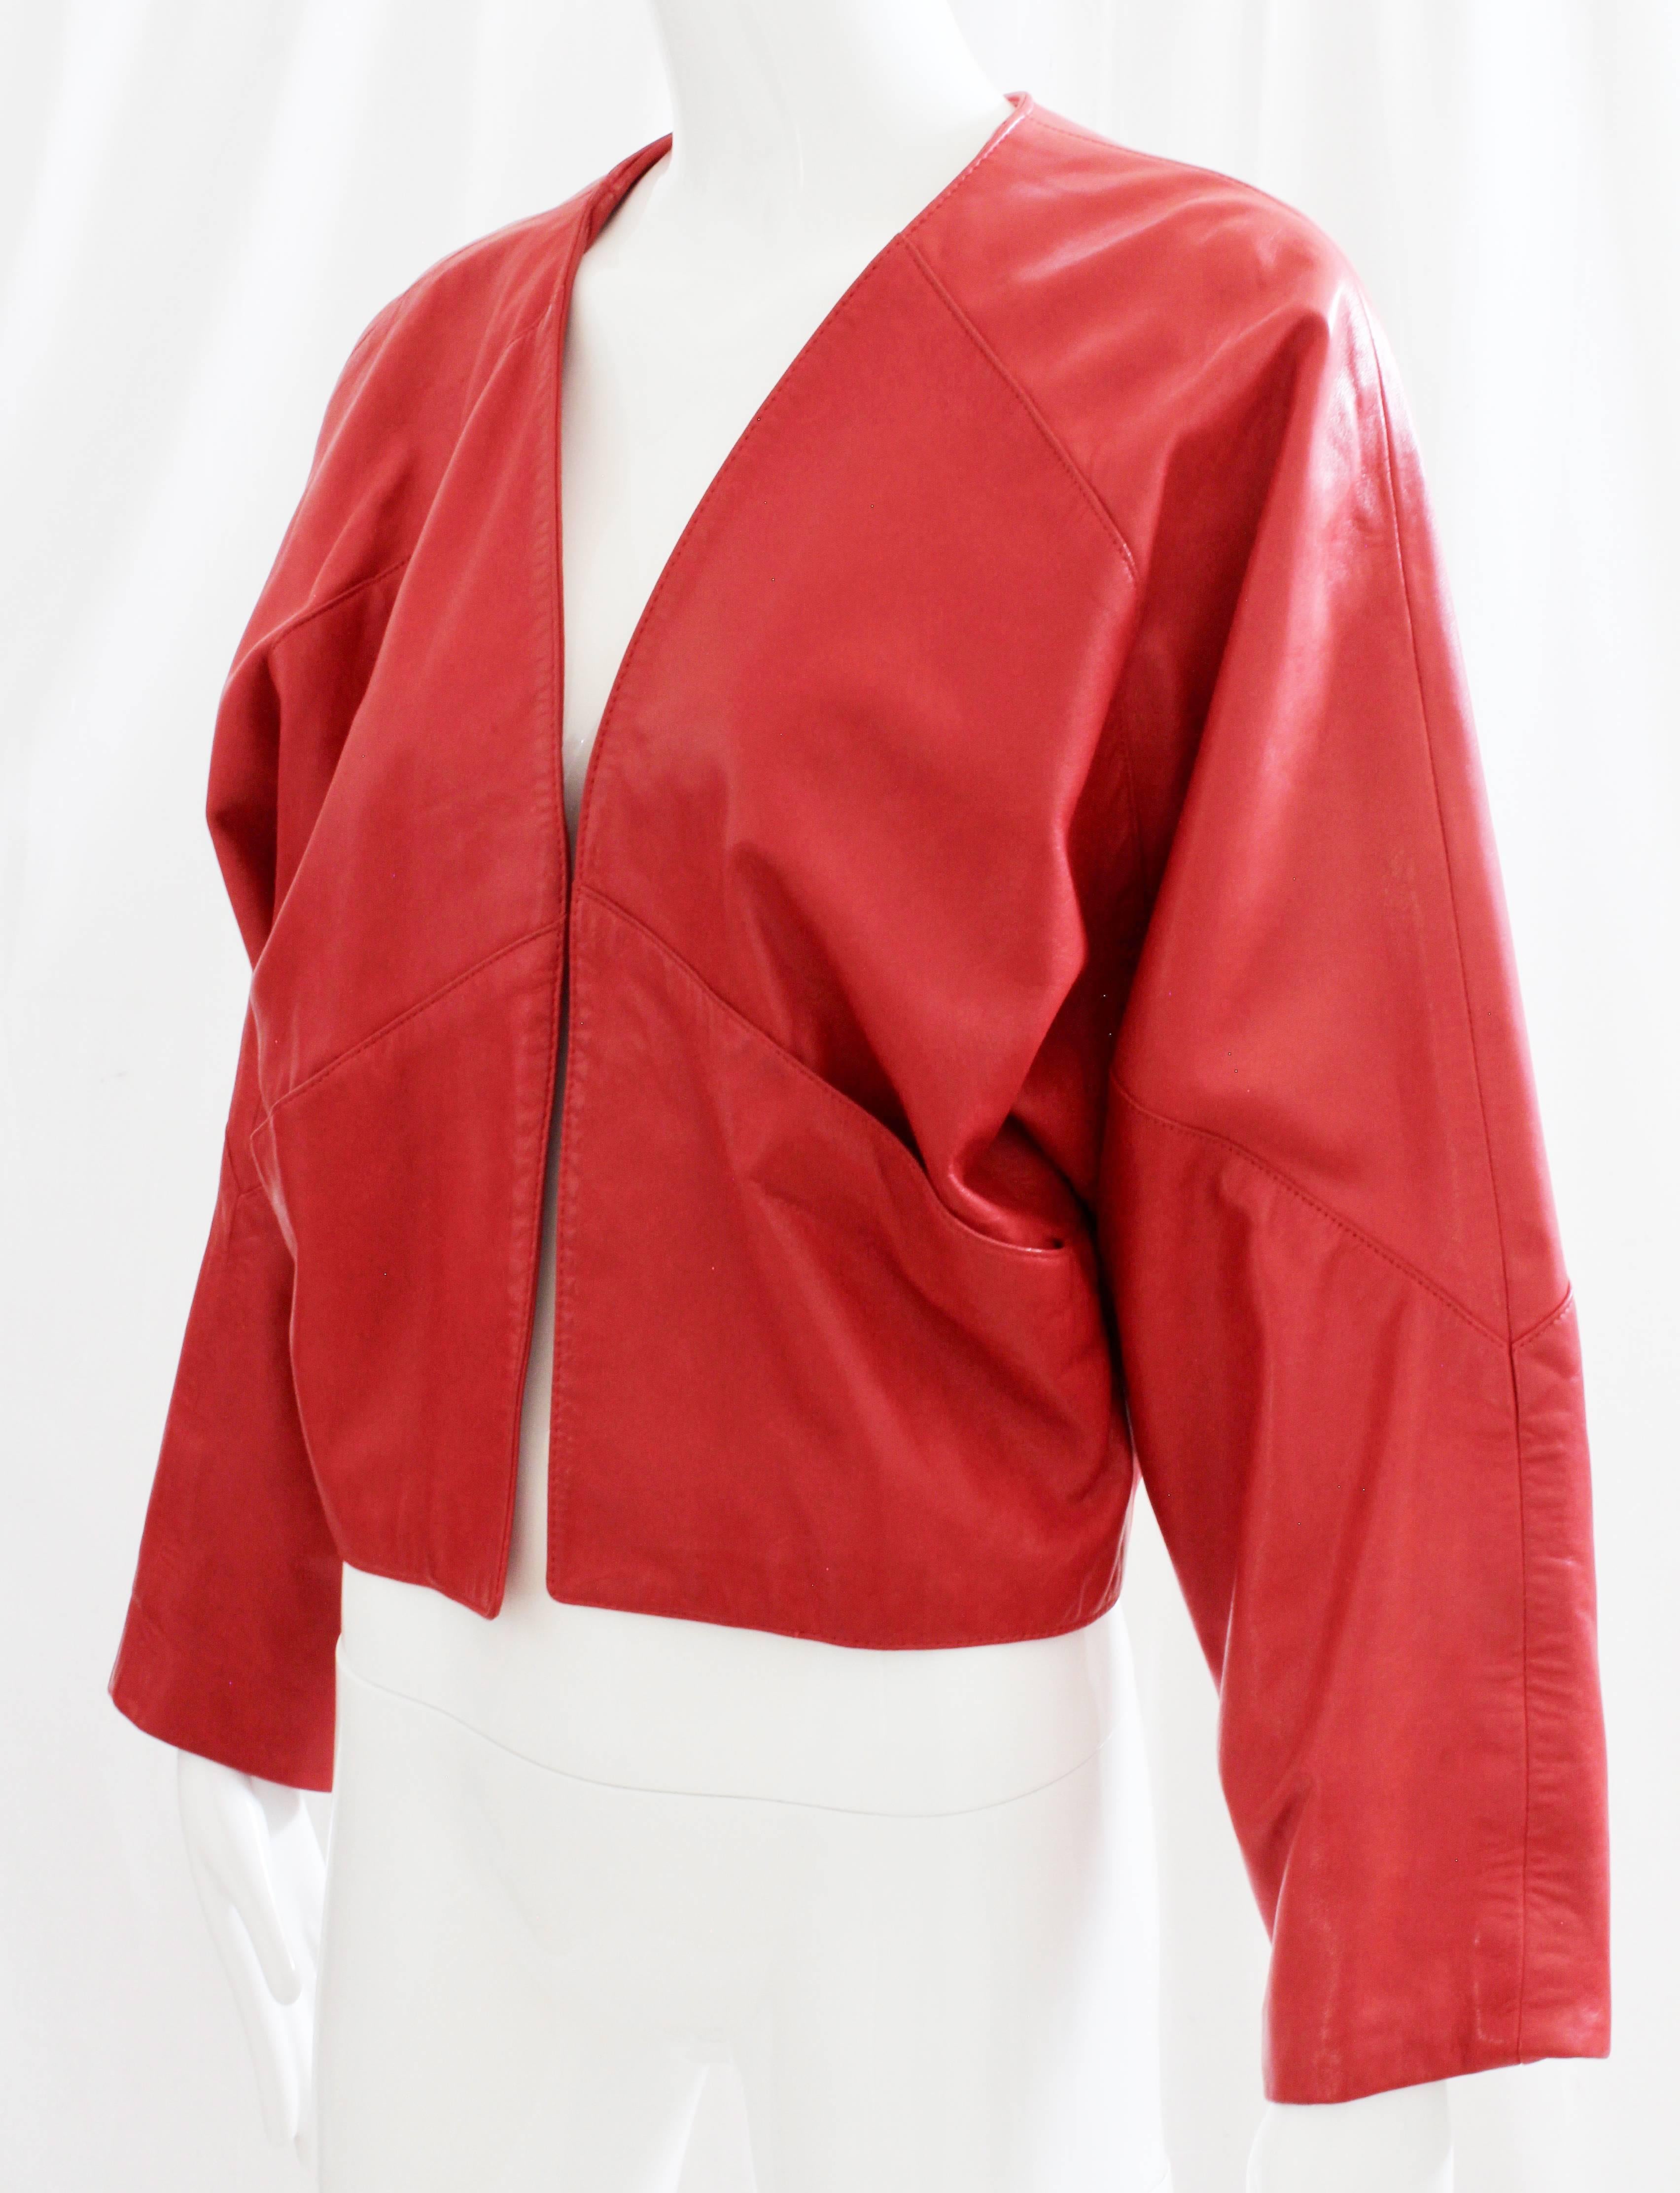 Women's Red Leather Jacket Retro 80s Dolman Sleeves Slash Pockets Size M